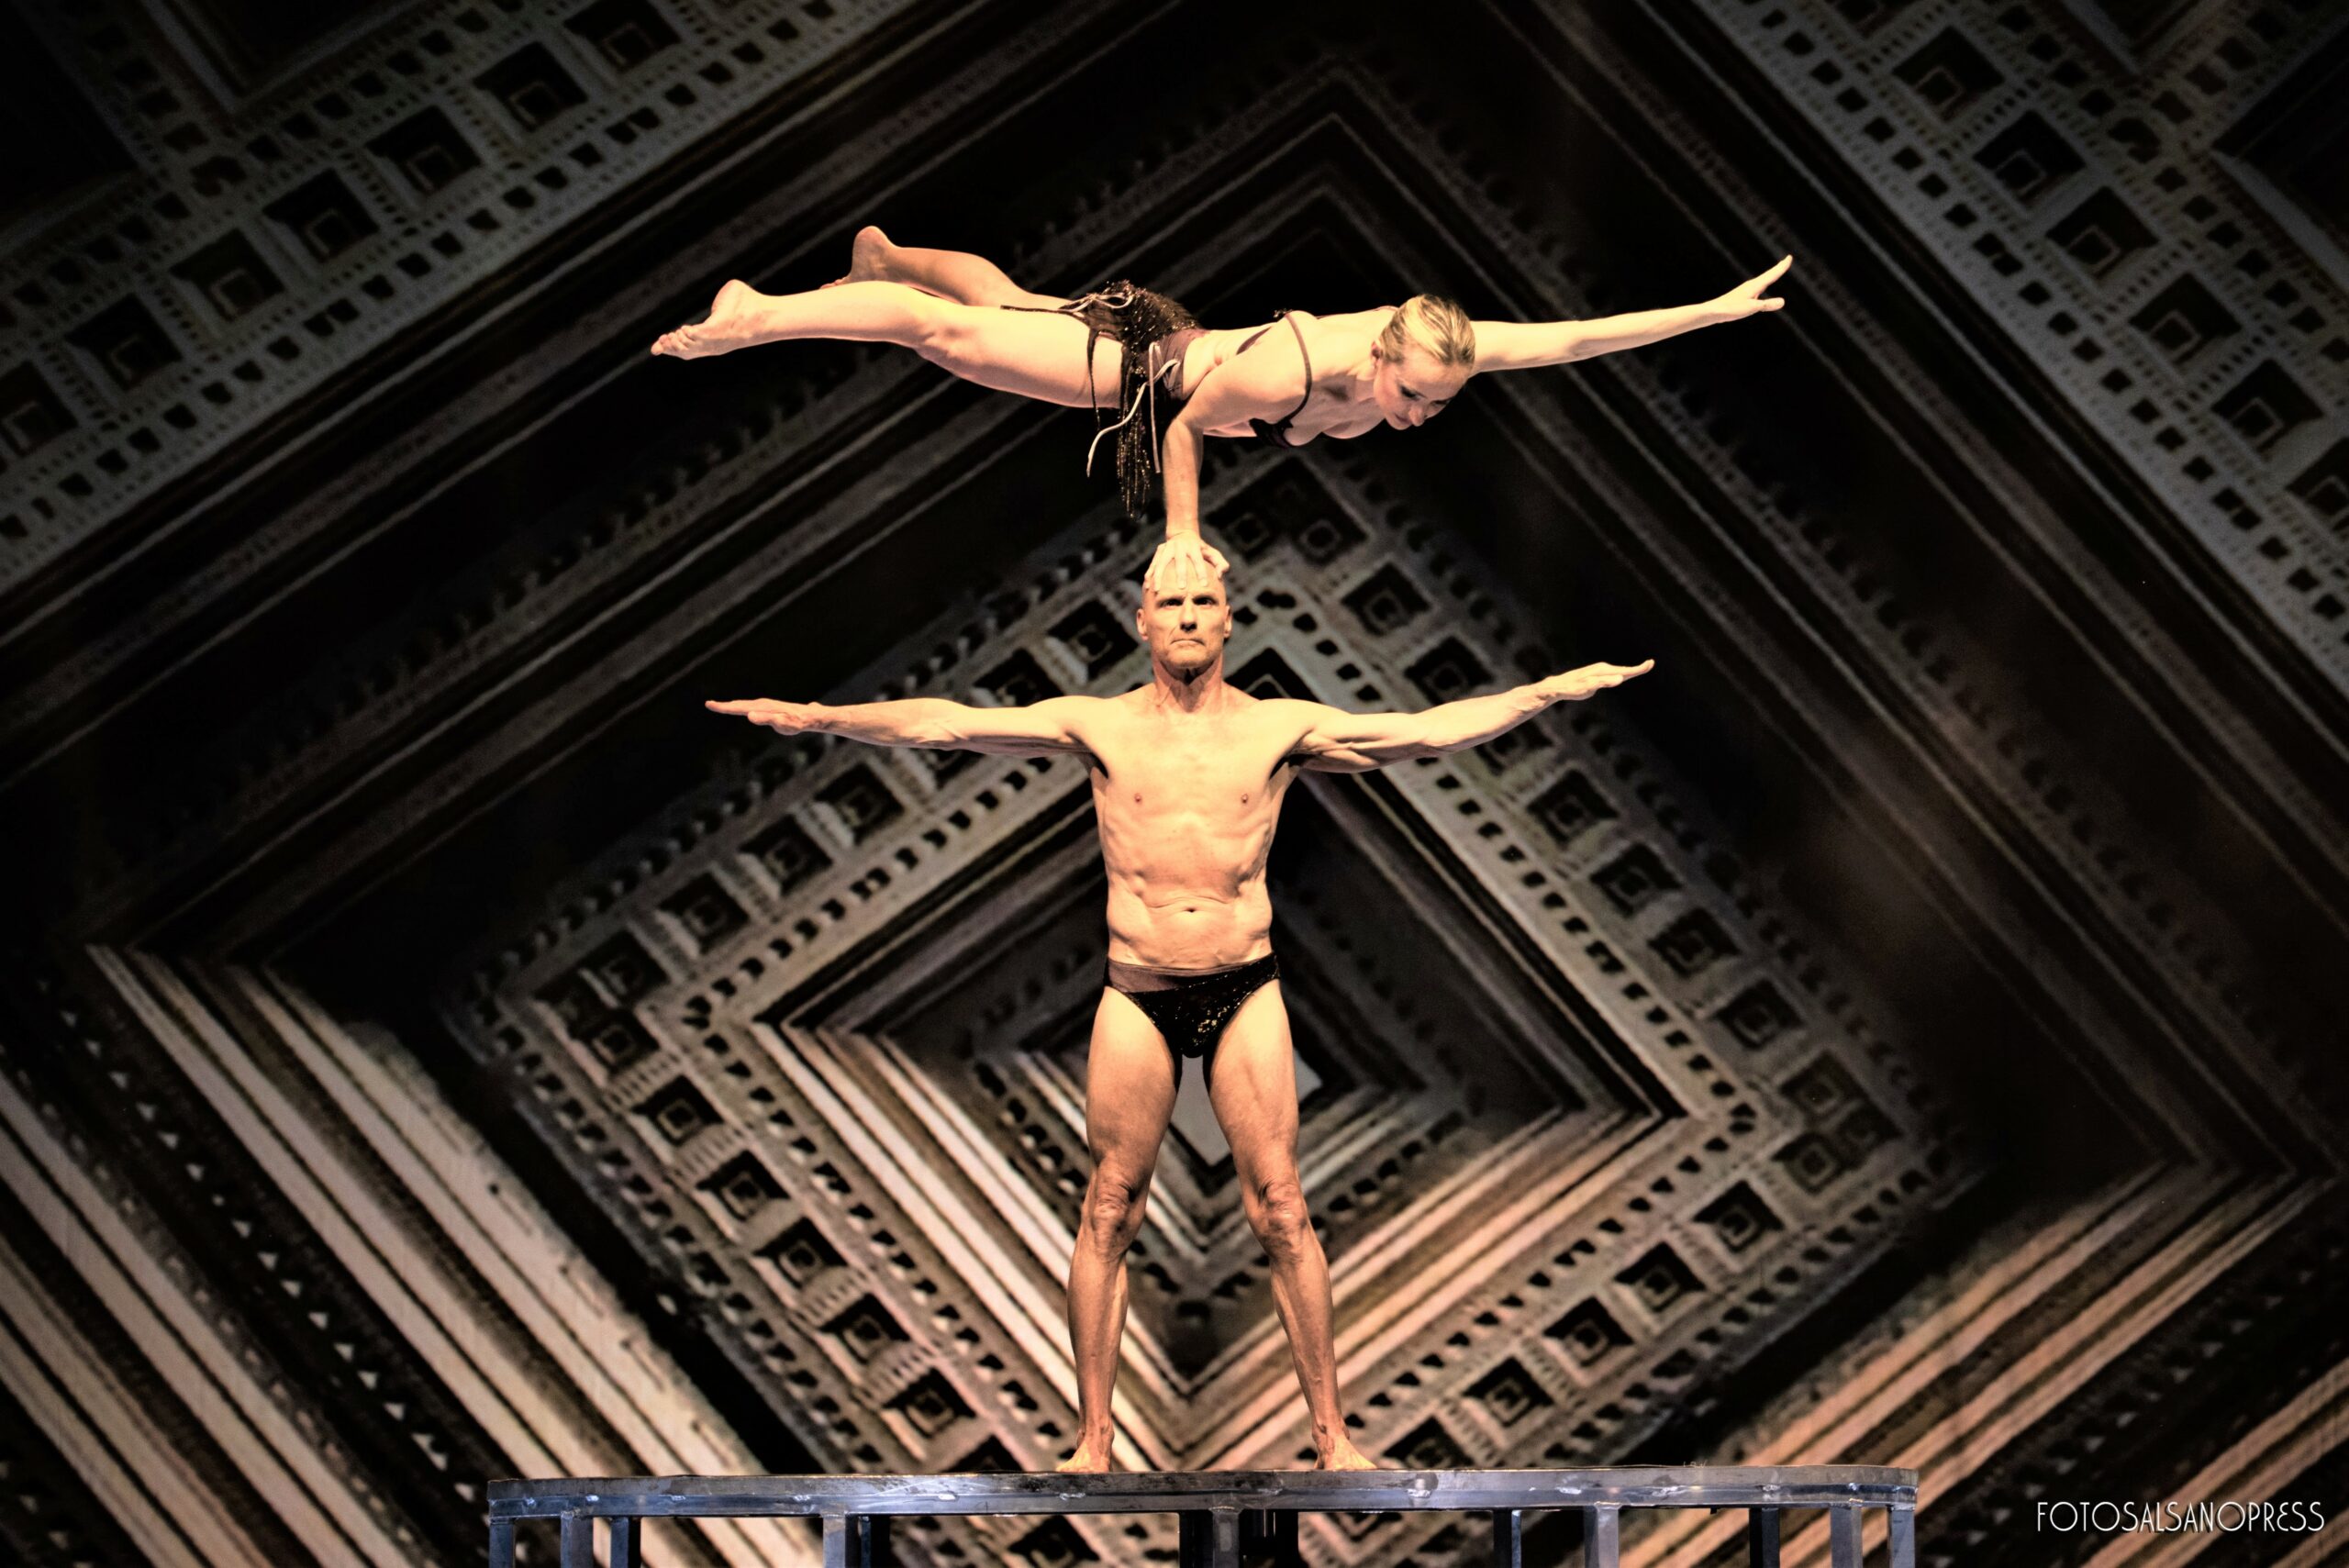 Mamacrowd, la piattaforma di equity crowdfunding seleziona Le Cirque Top Performers